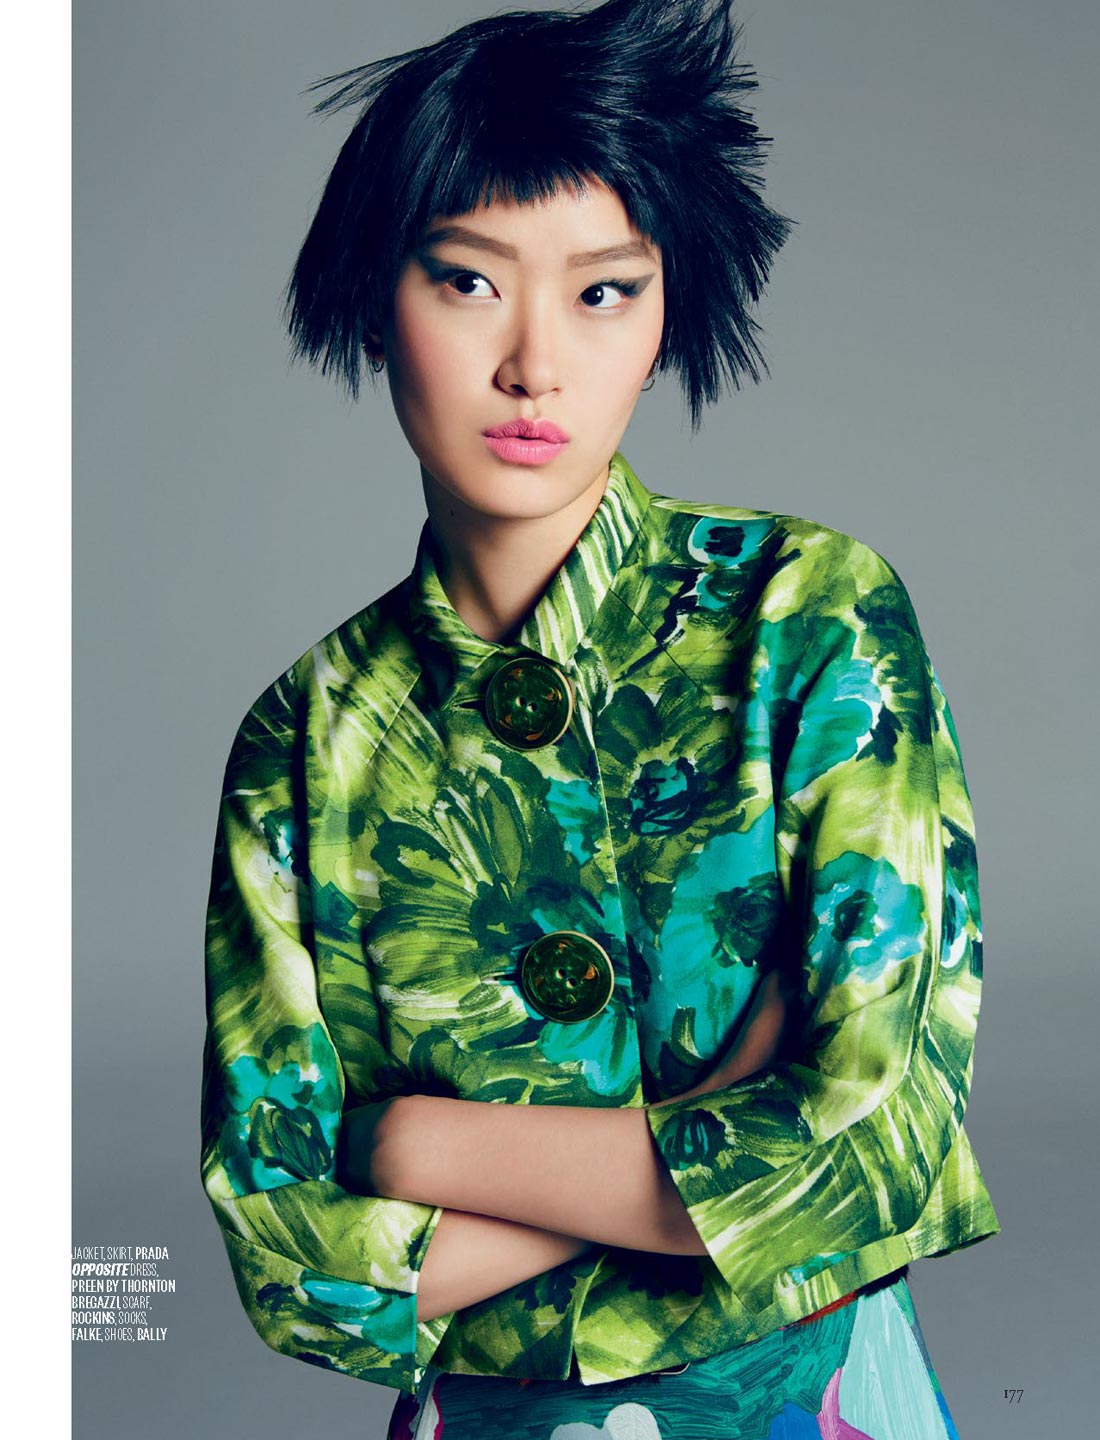 Fun Color Fashion Story - Vogue Arabia Magazine - Model Pong Lee I Greg Sorensen I Fashion & Beauty Photographer I NYC